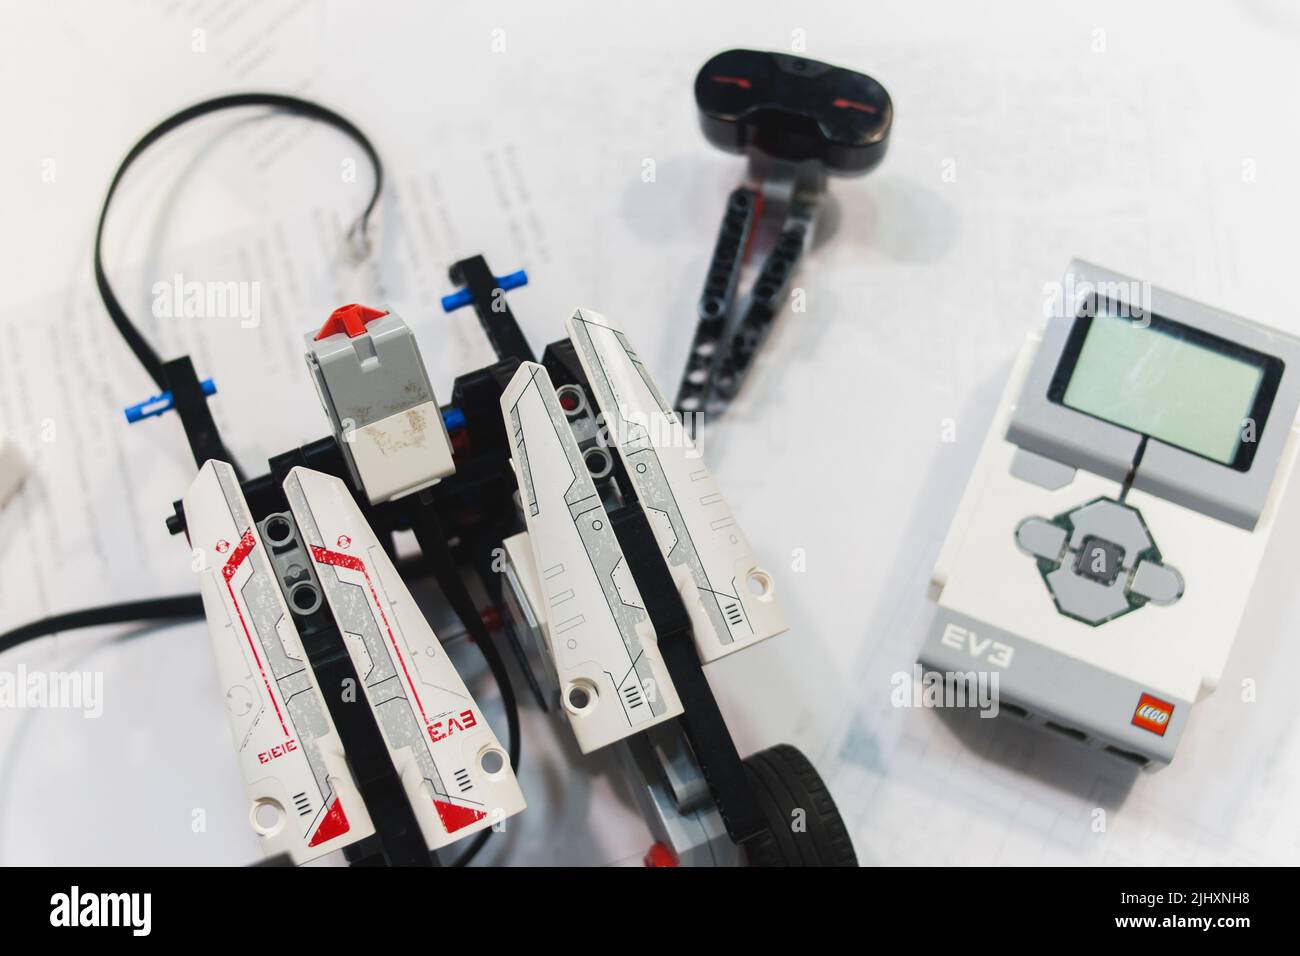 Lego Eve robotics mechatronics assembly concept Stock Photo